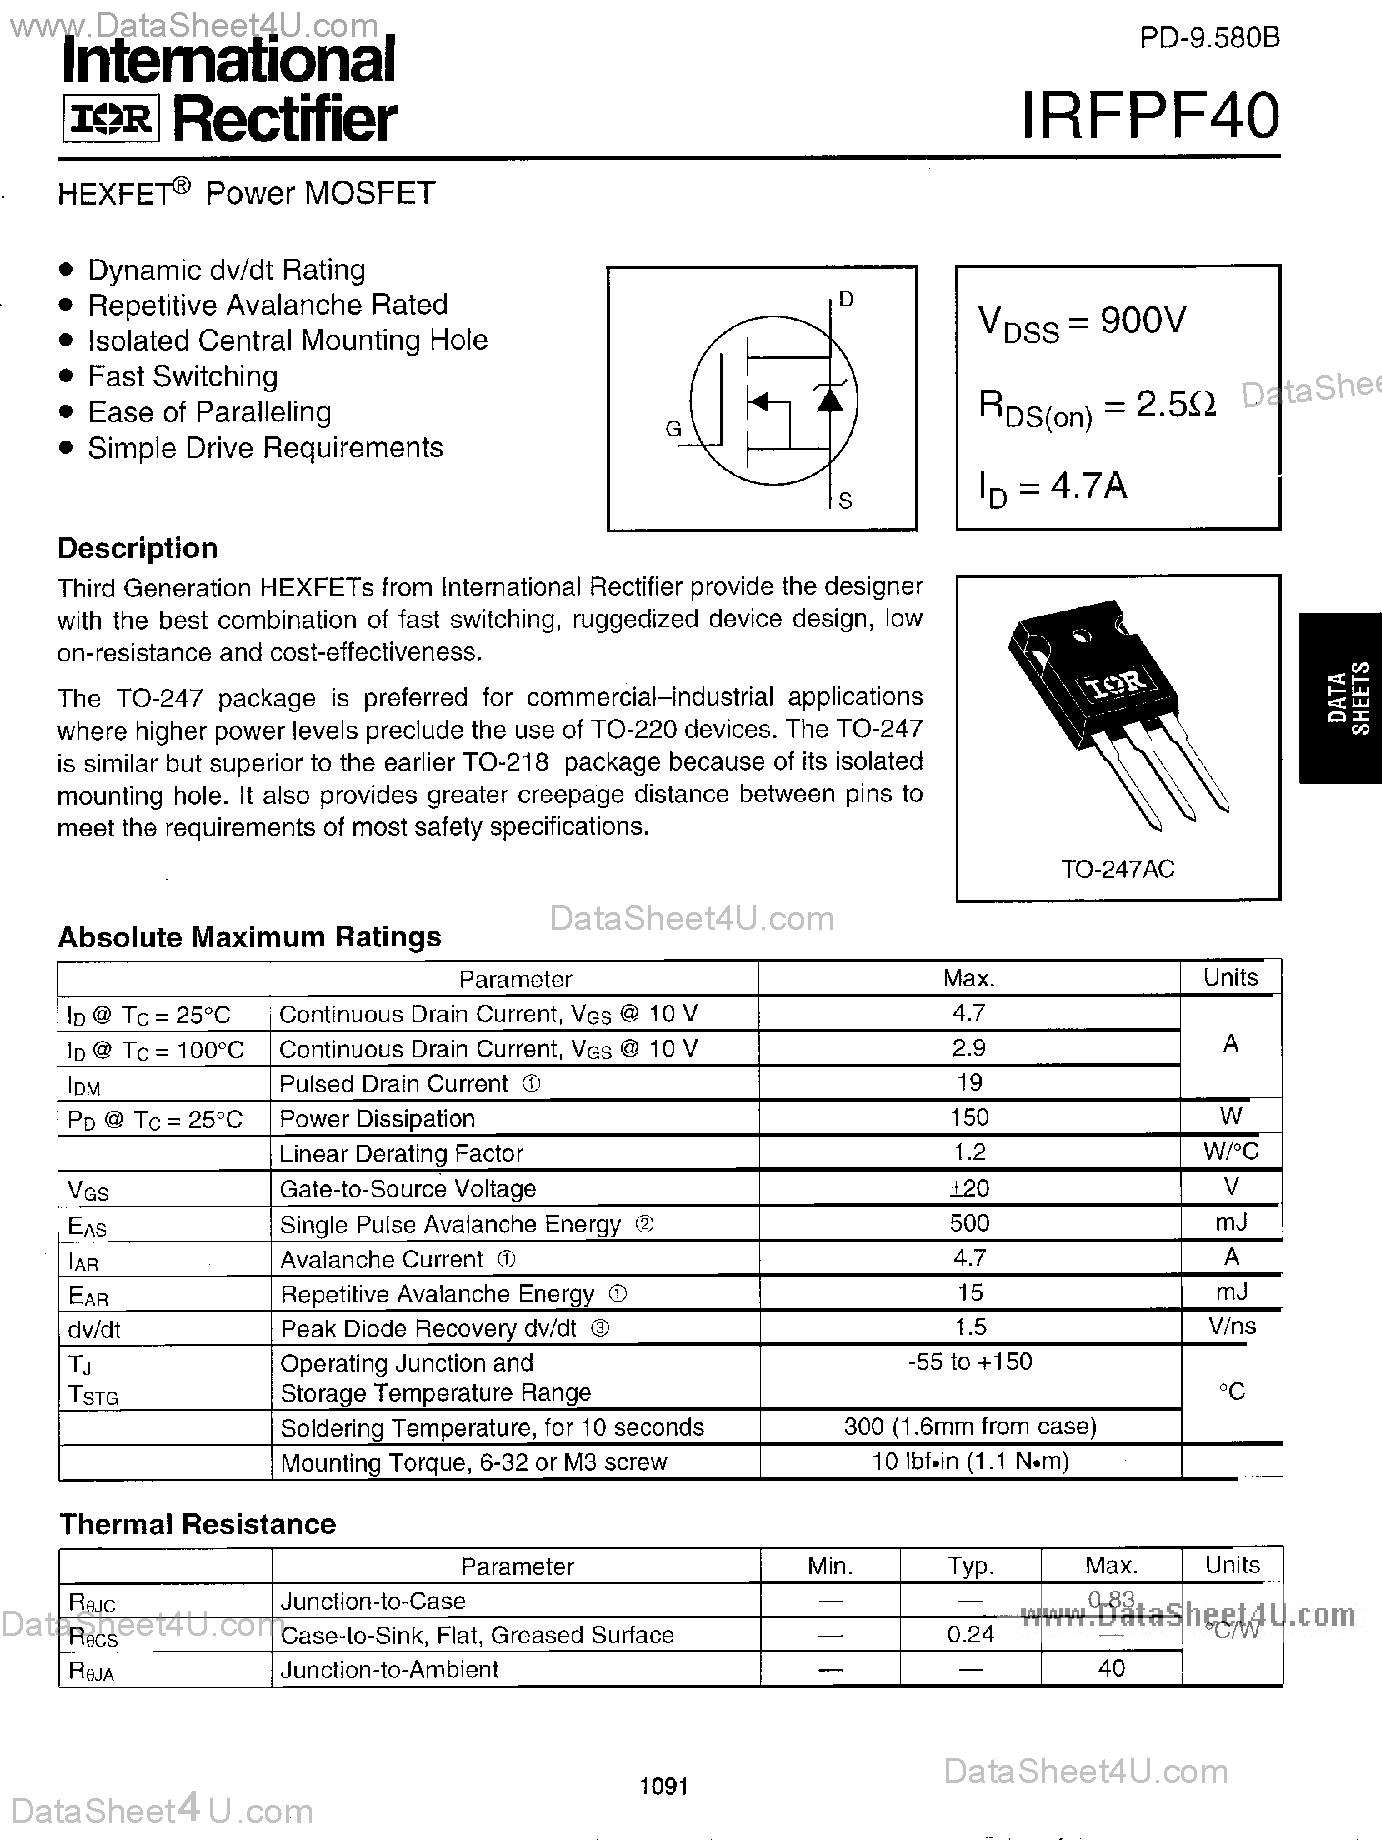 Datasheet IRFPF40 - Power MOSFET page 1